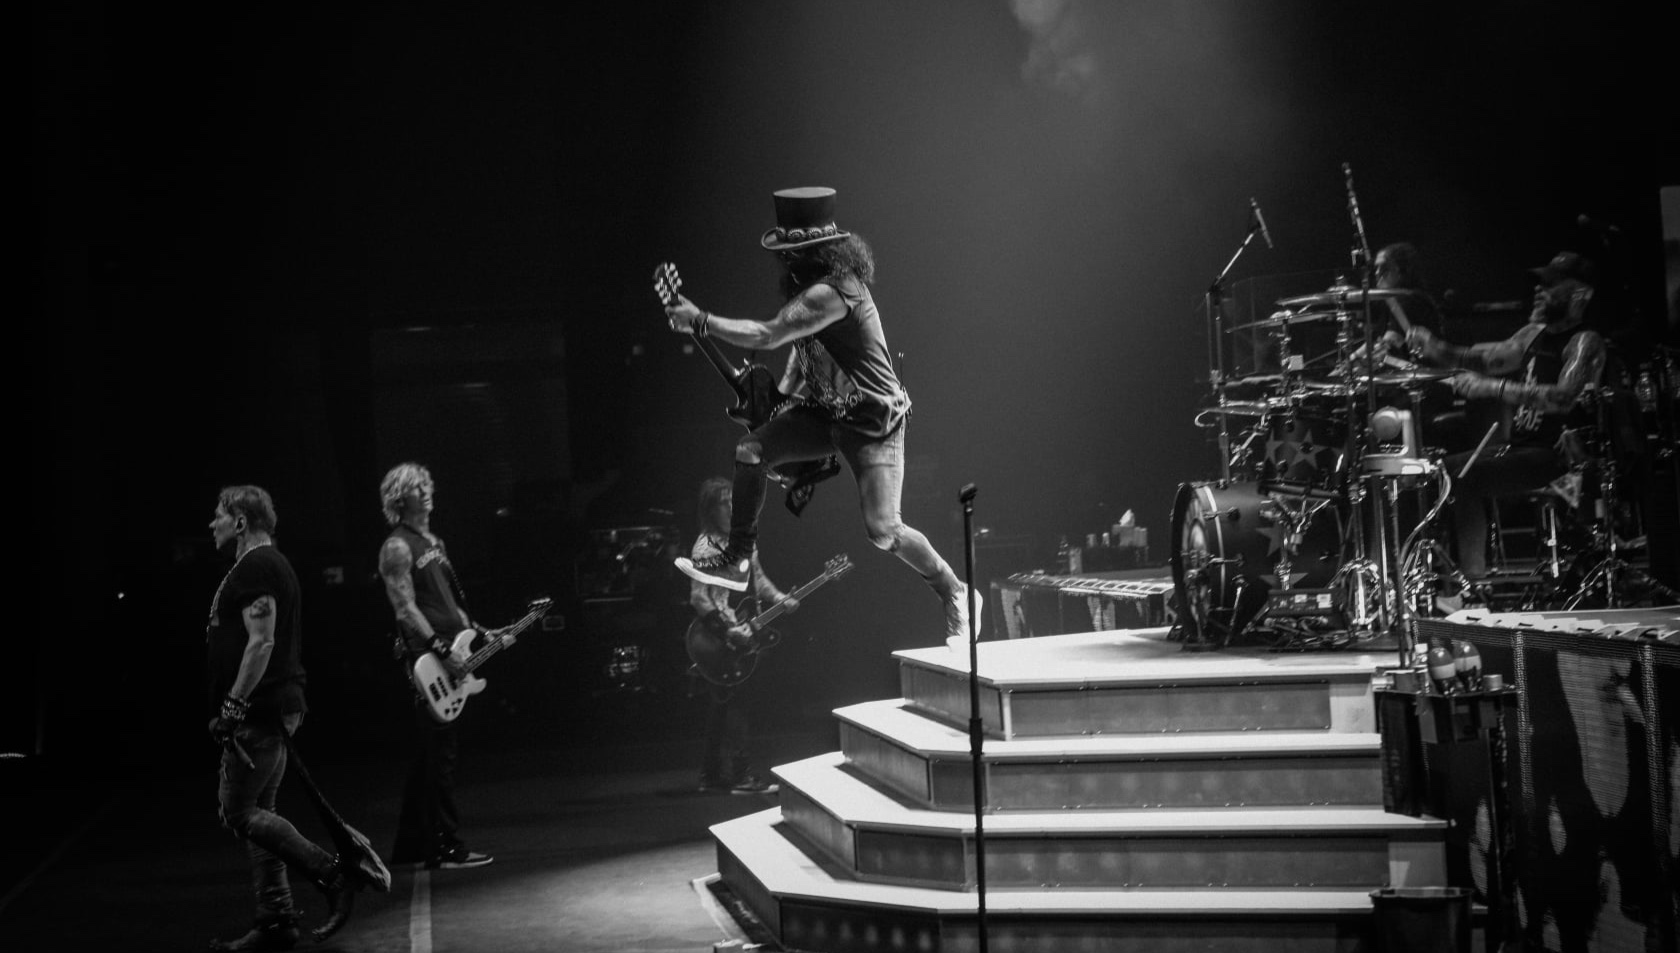 Guns N' Roses concert in Warsaw on 20th June!